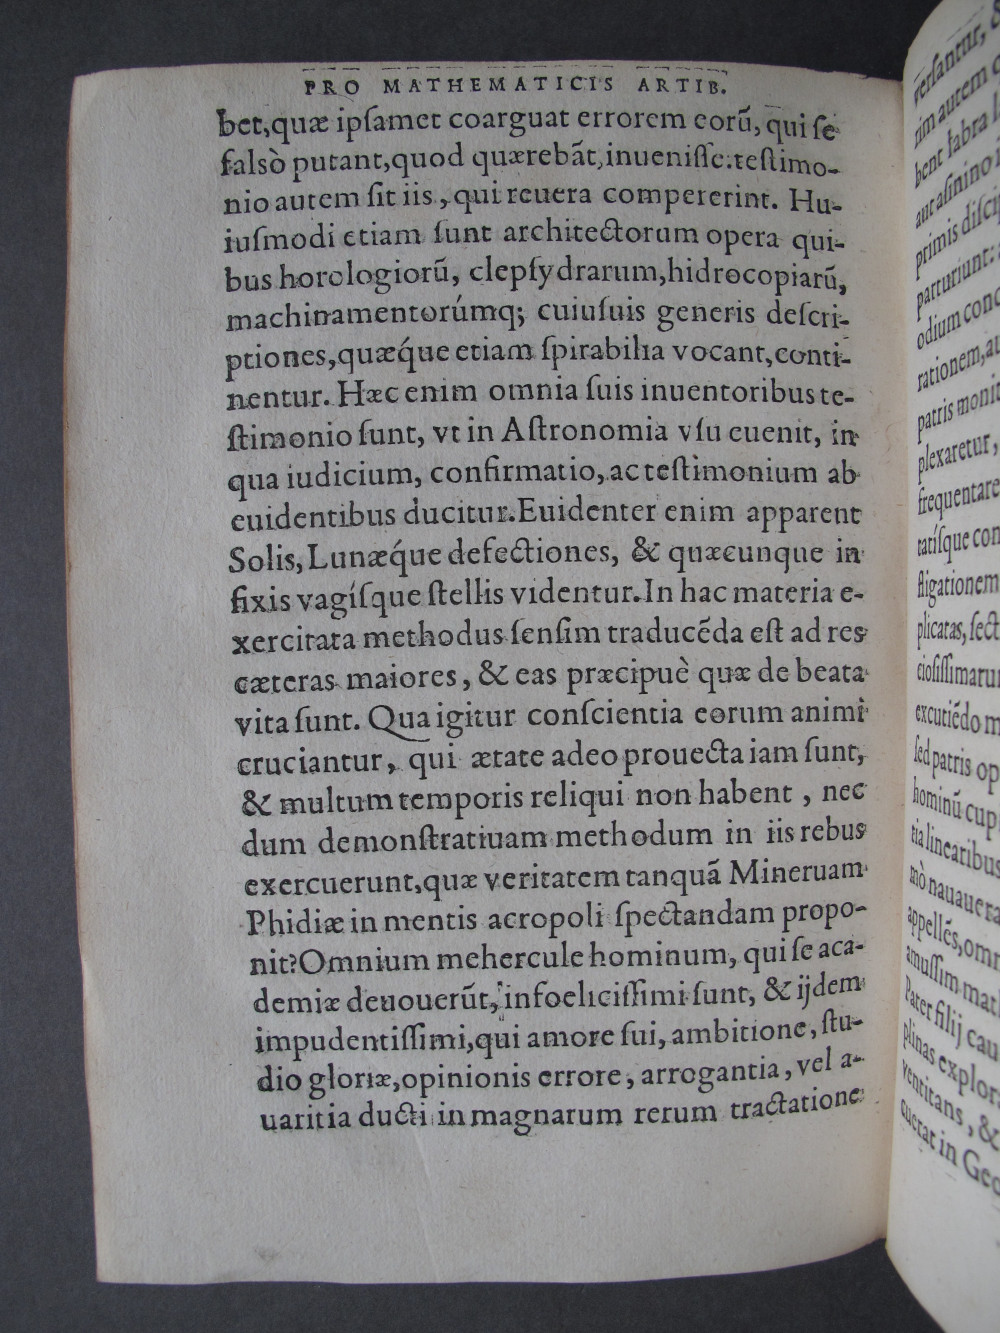 Folio 18 verso